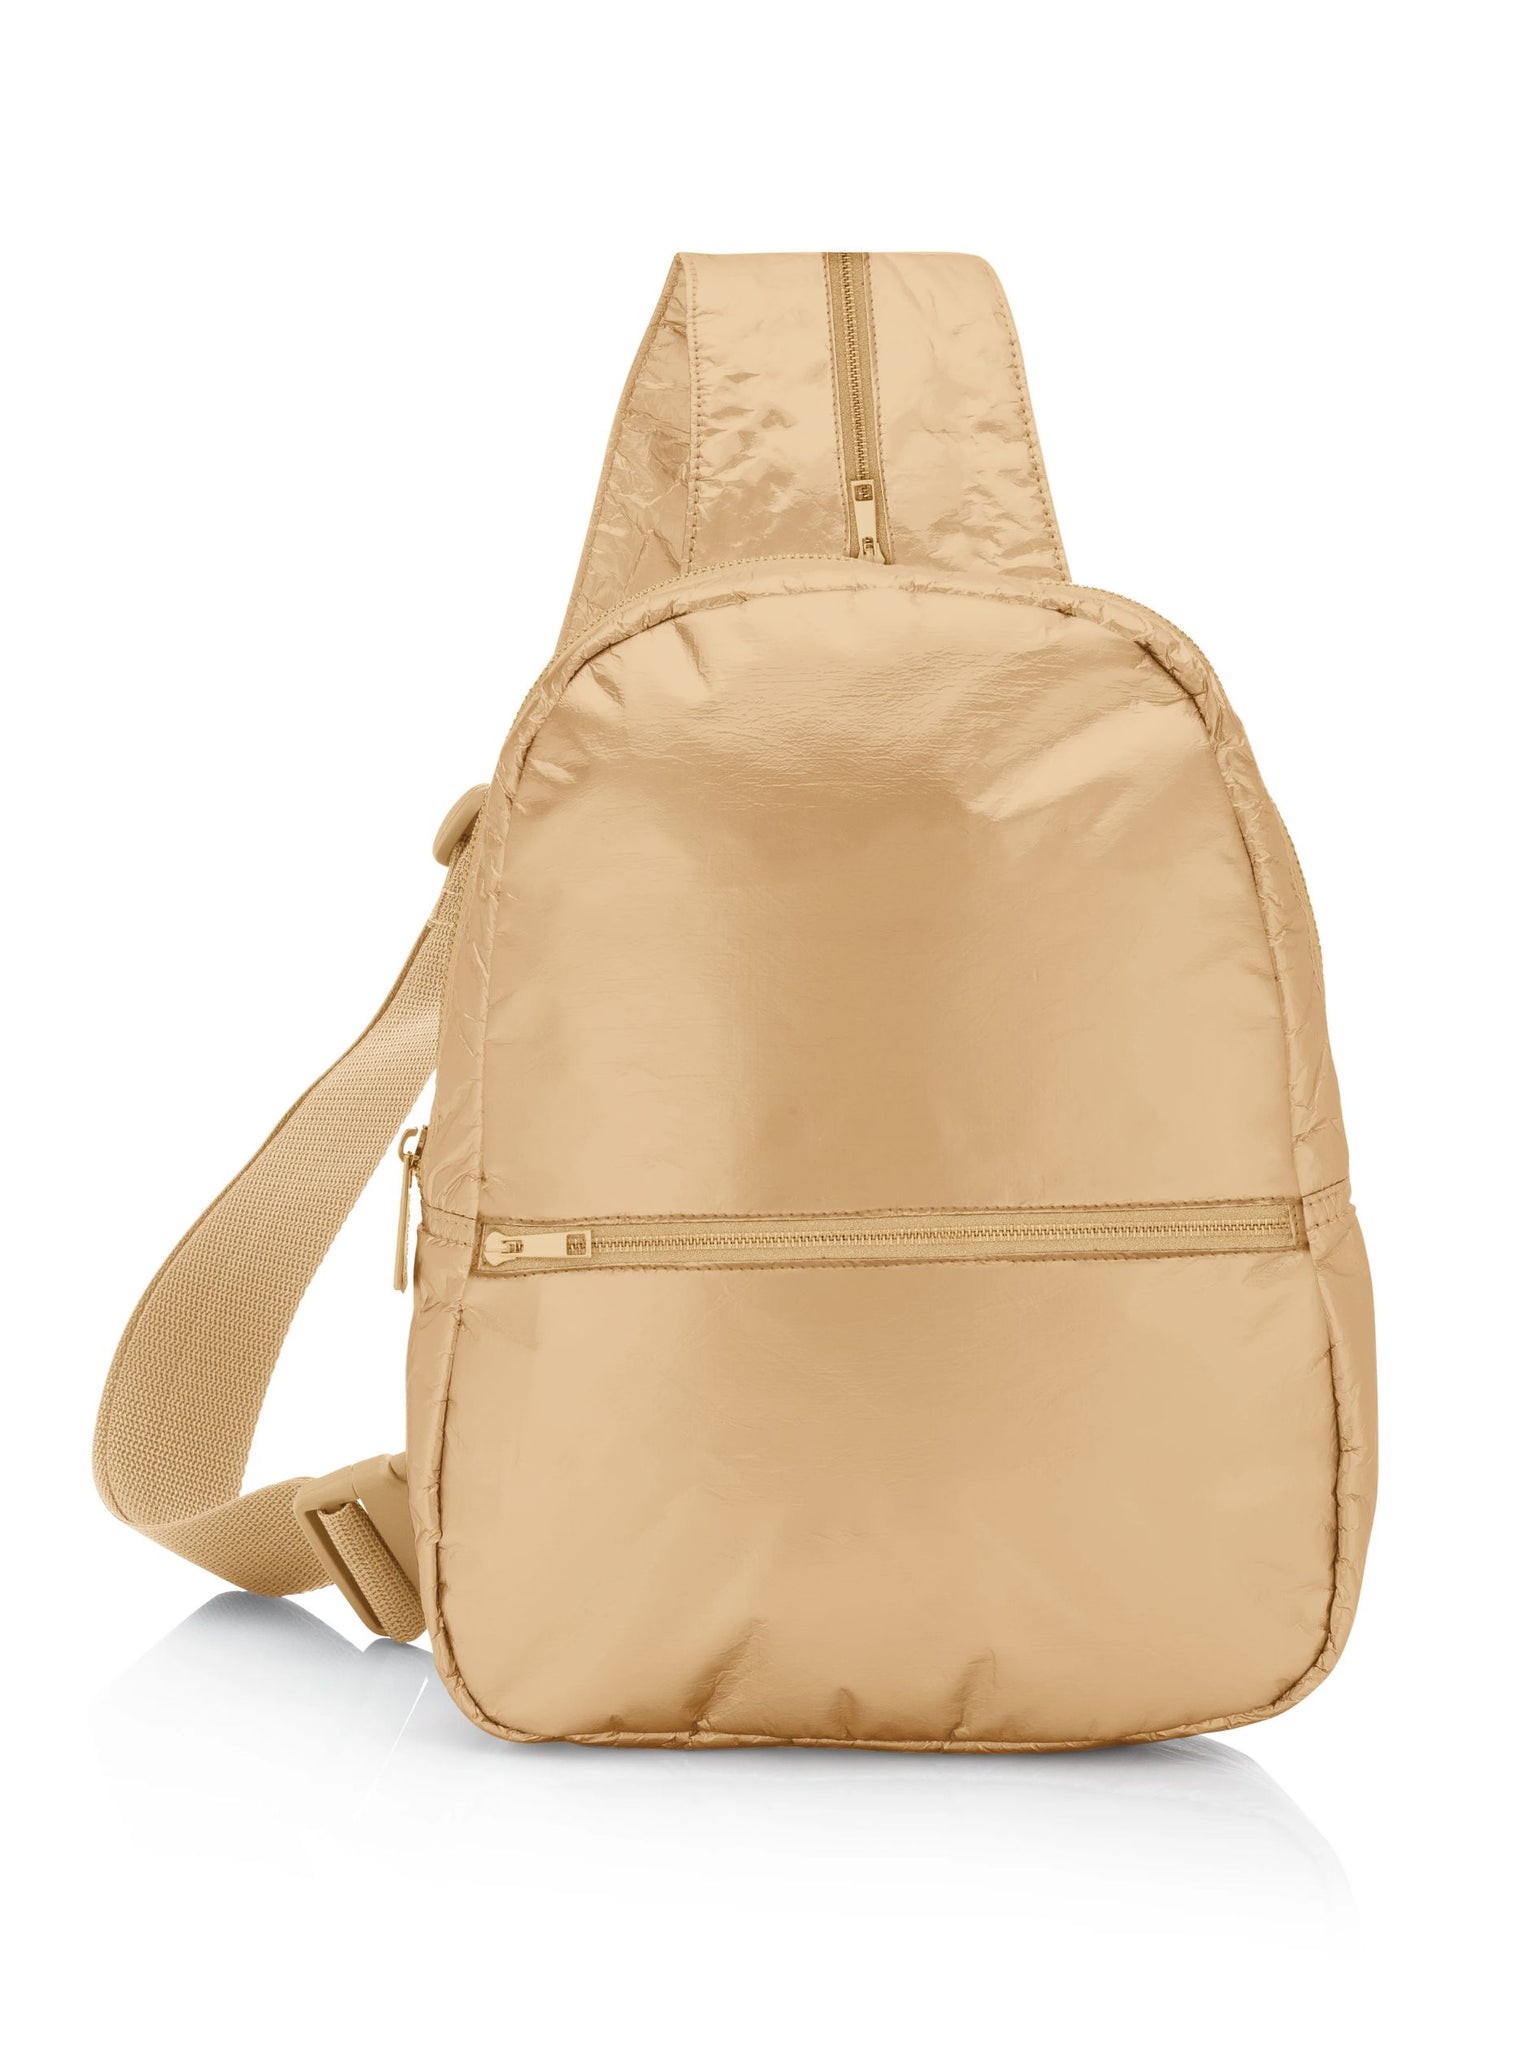 Crossbody backpack or sling bag in gold